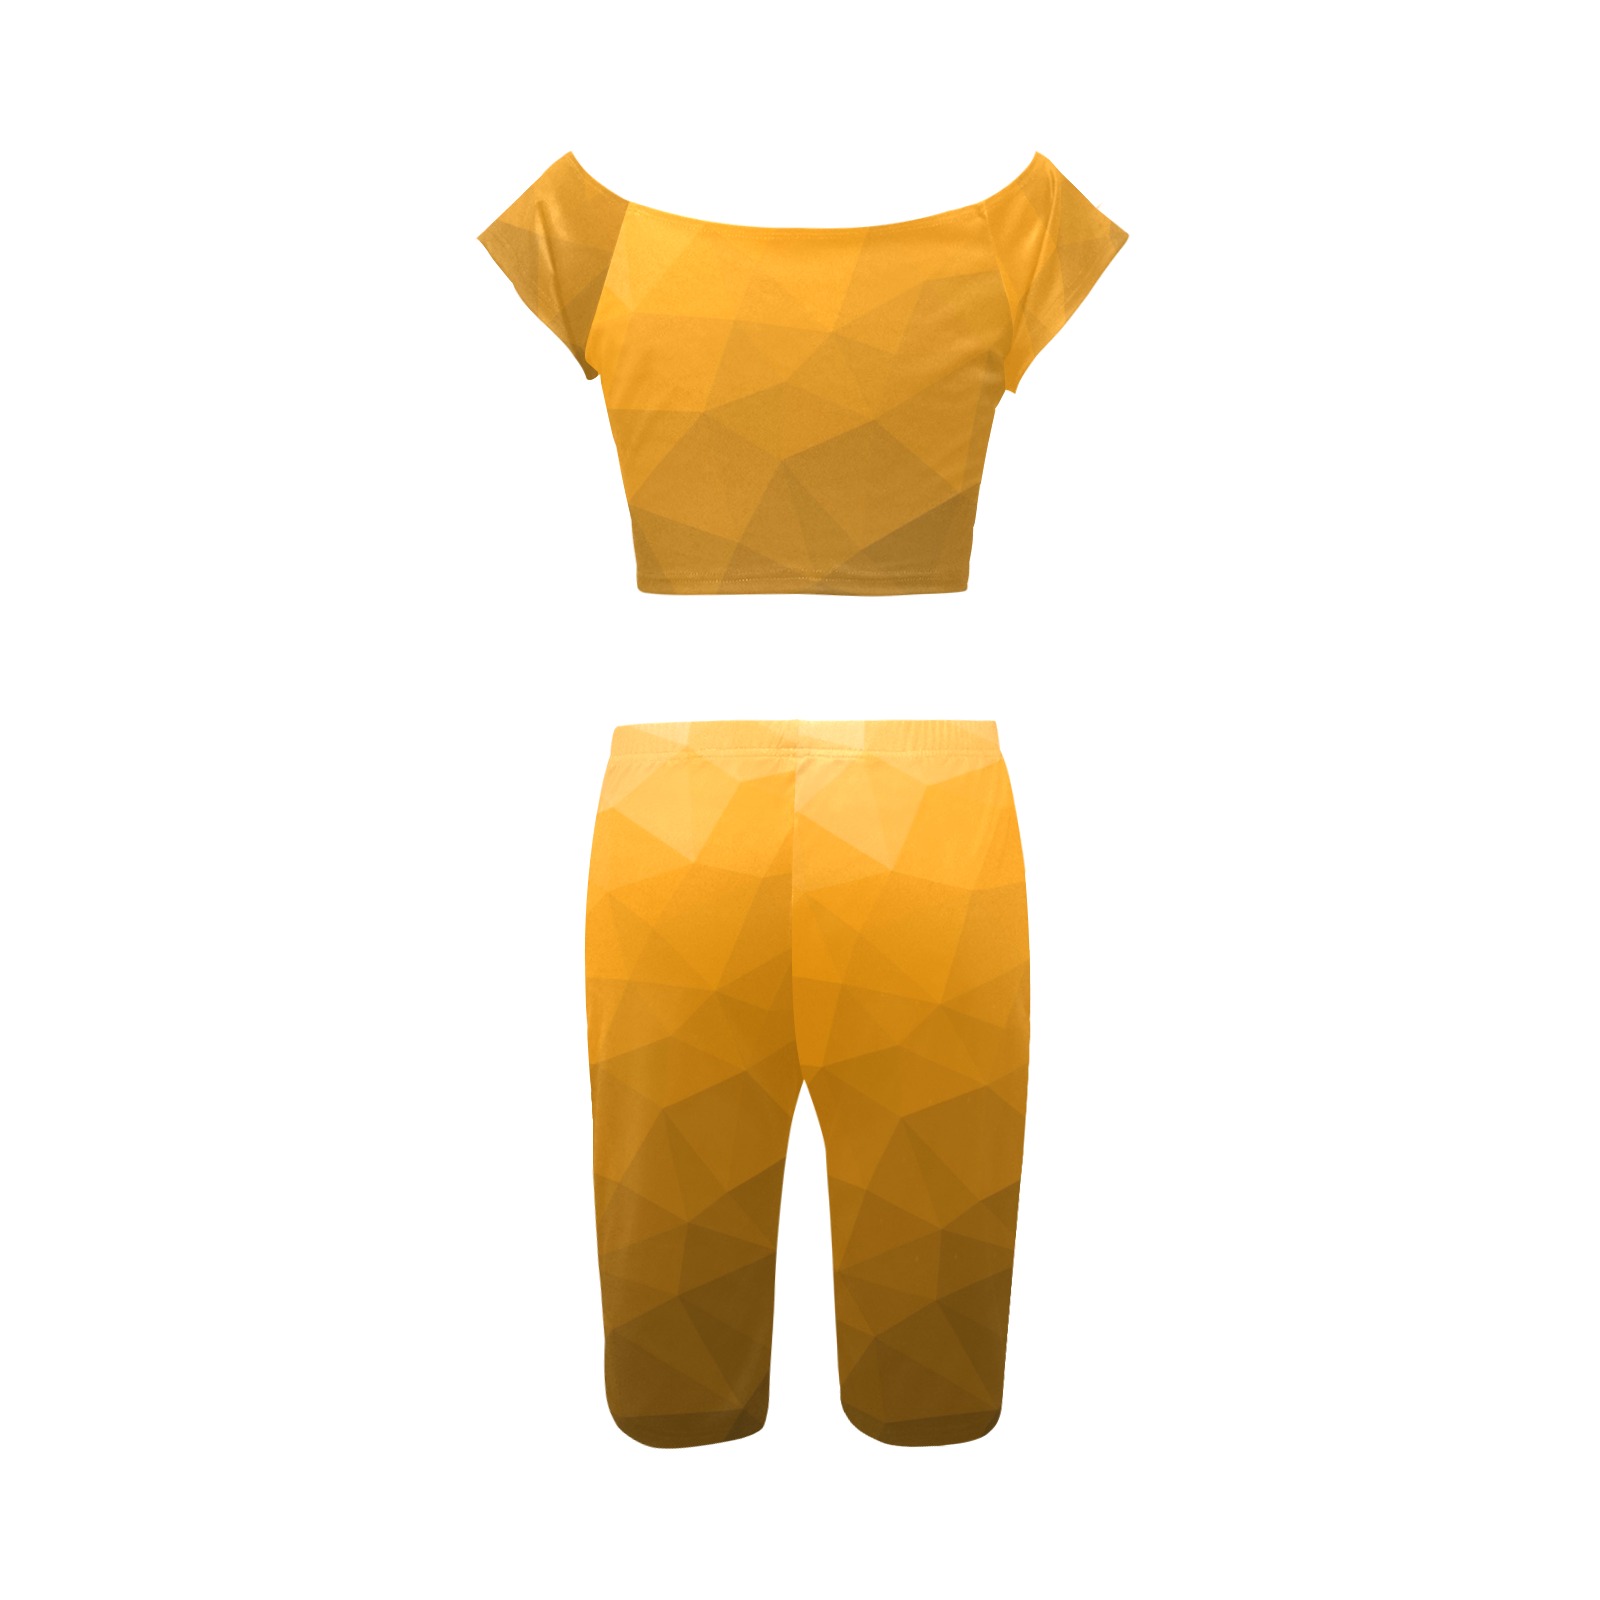 Orange gradient geometric mesh pattern Women's Crop Top Yoga Set